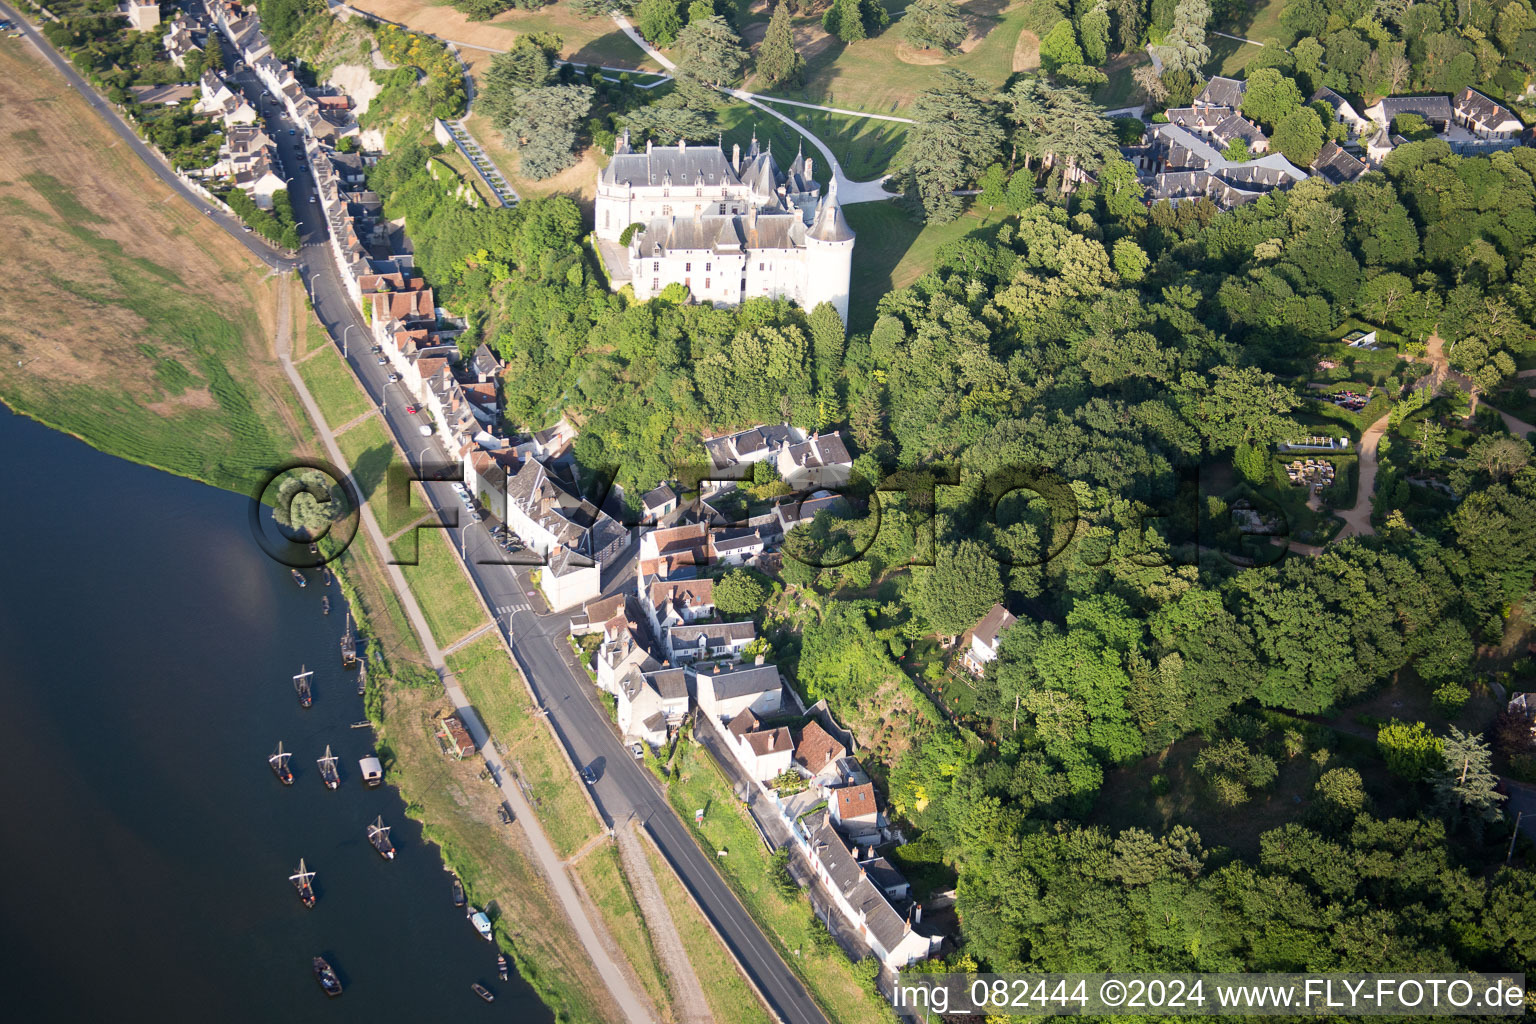 Drone recording of Chaumont-sur-Loire in the state Loir et Cher, France